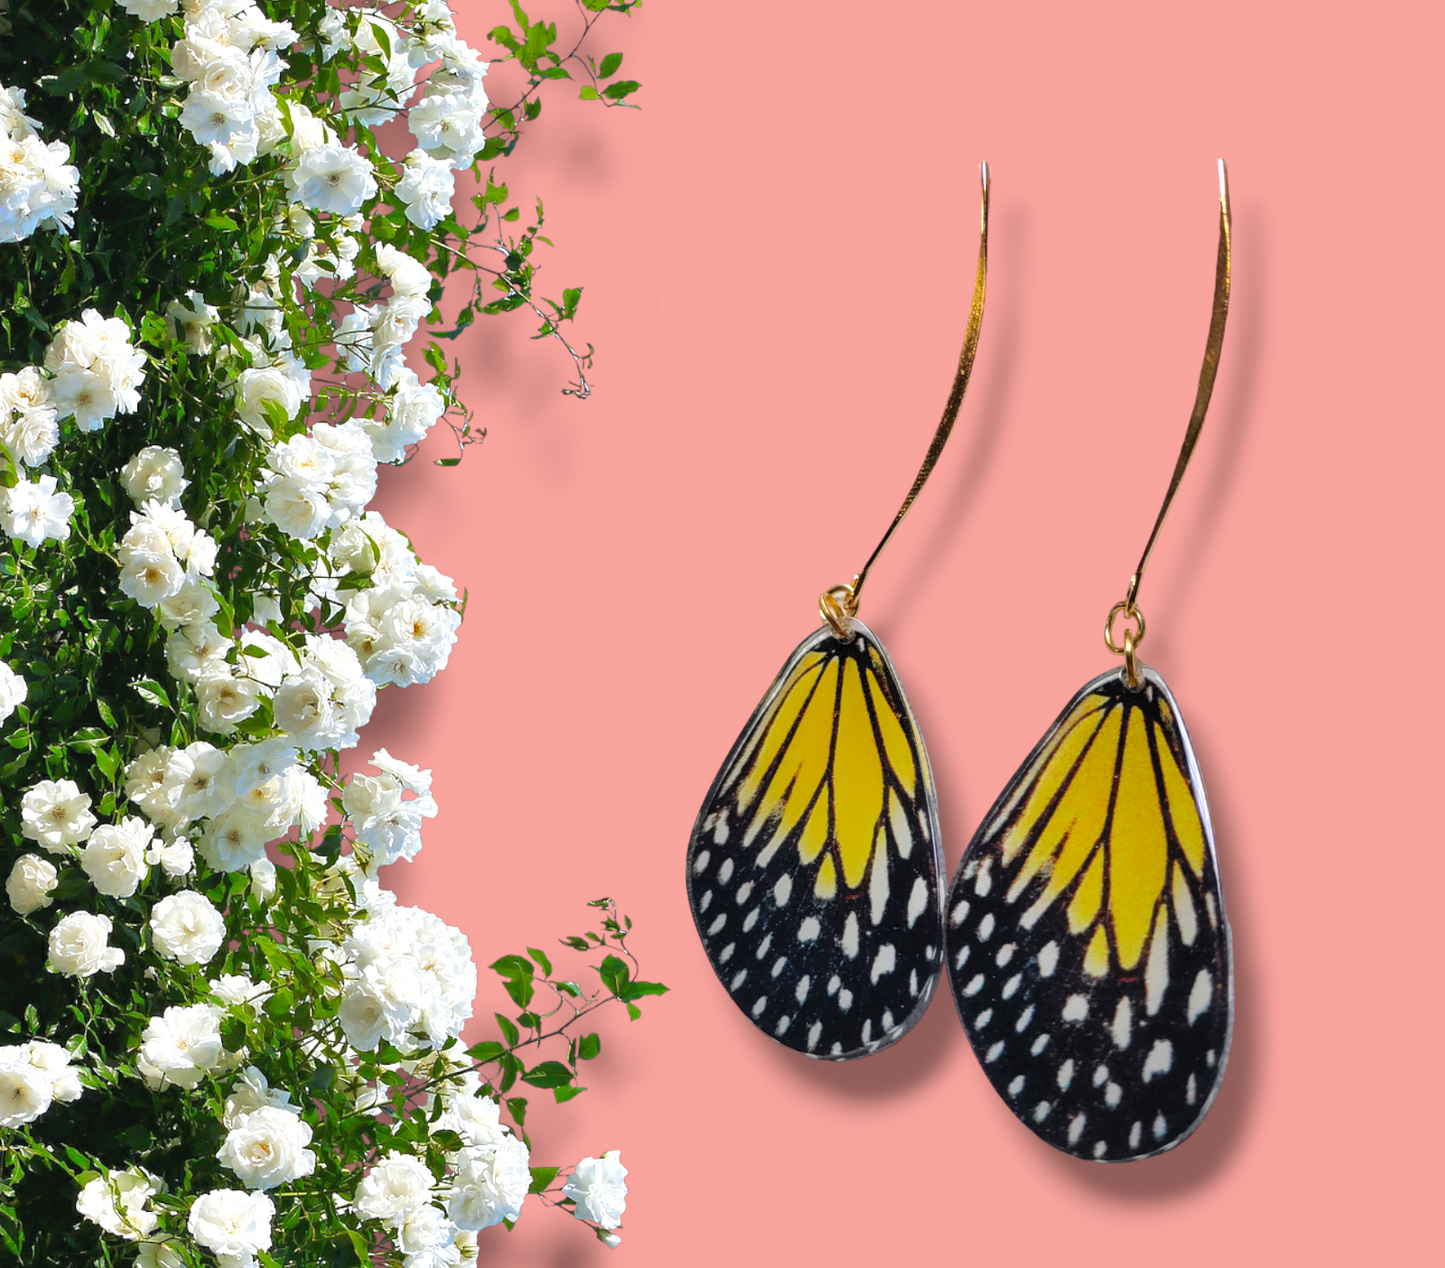 Butterfly Wings (Resin ) earrings from Karma Goodness Designs